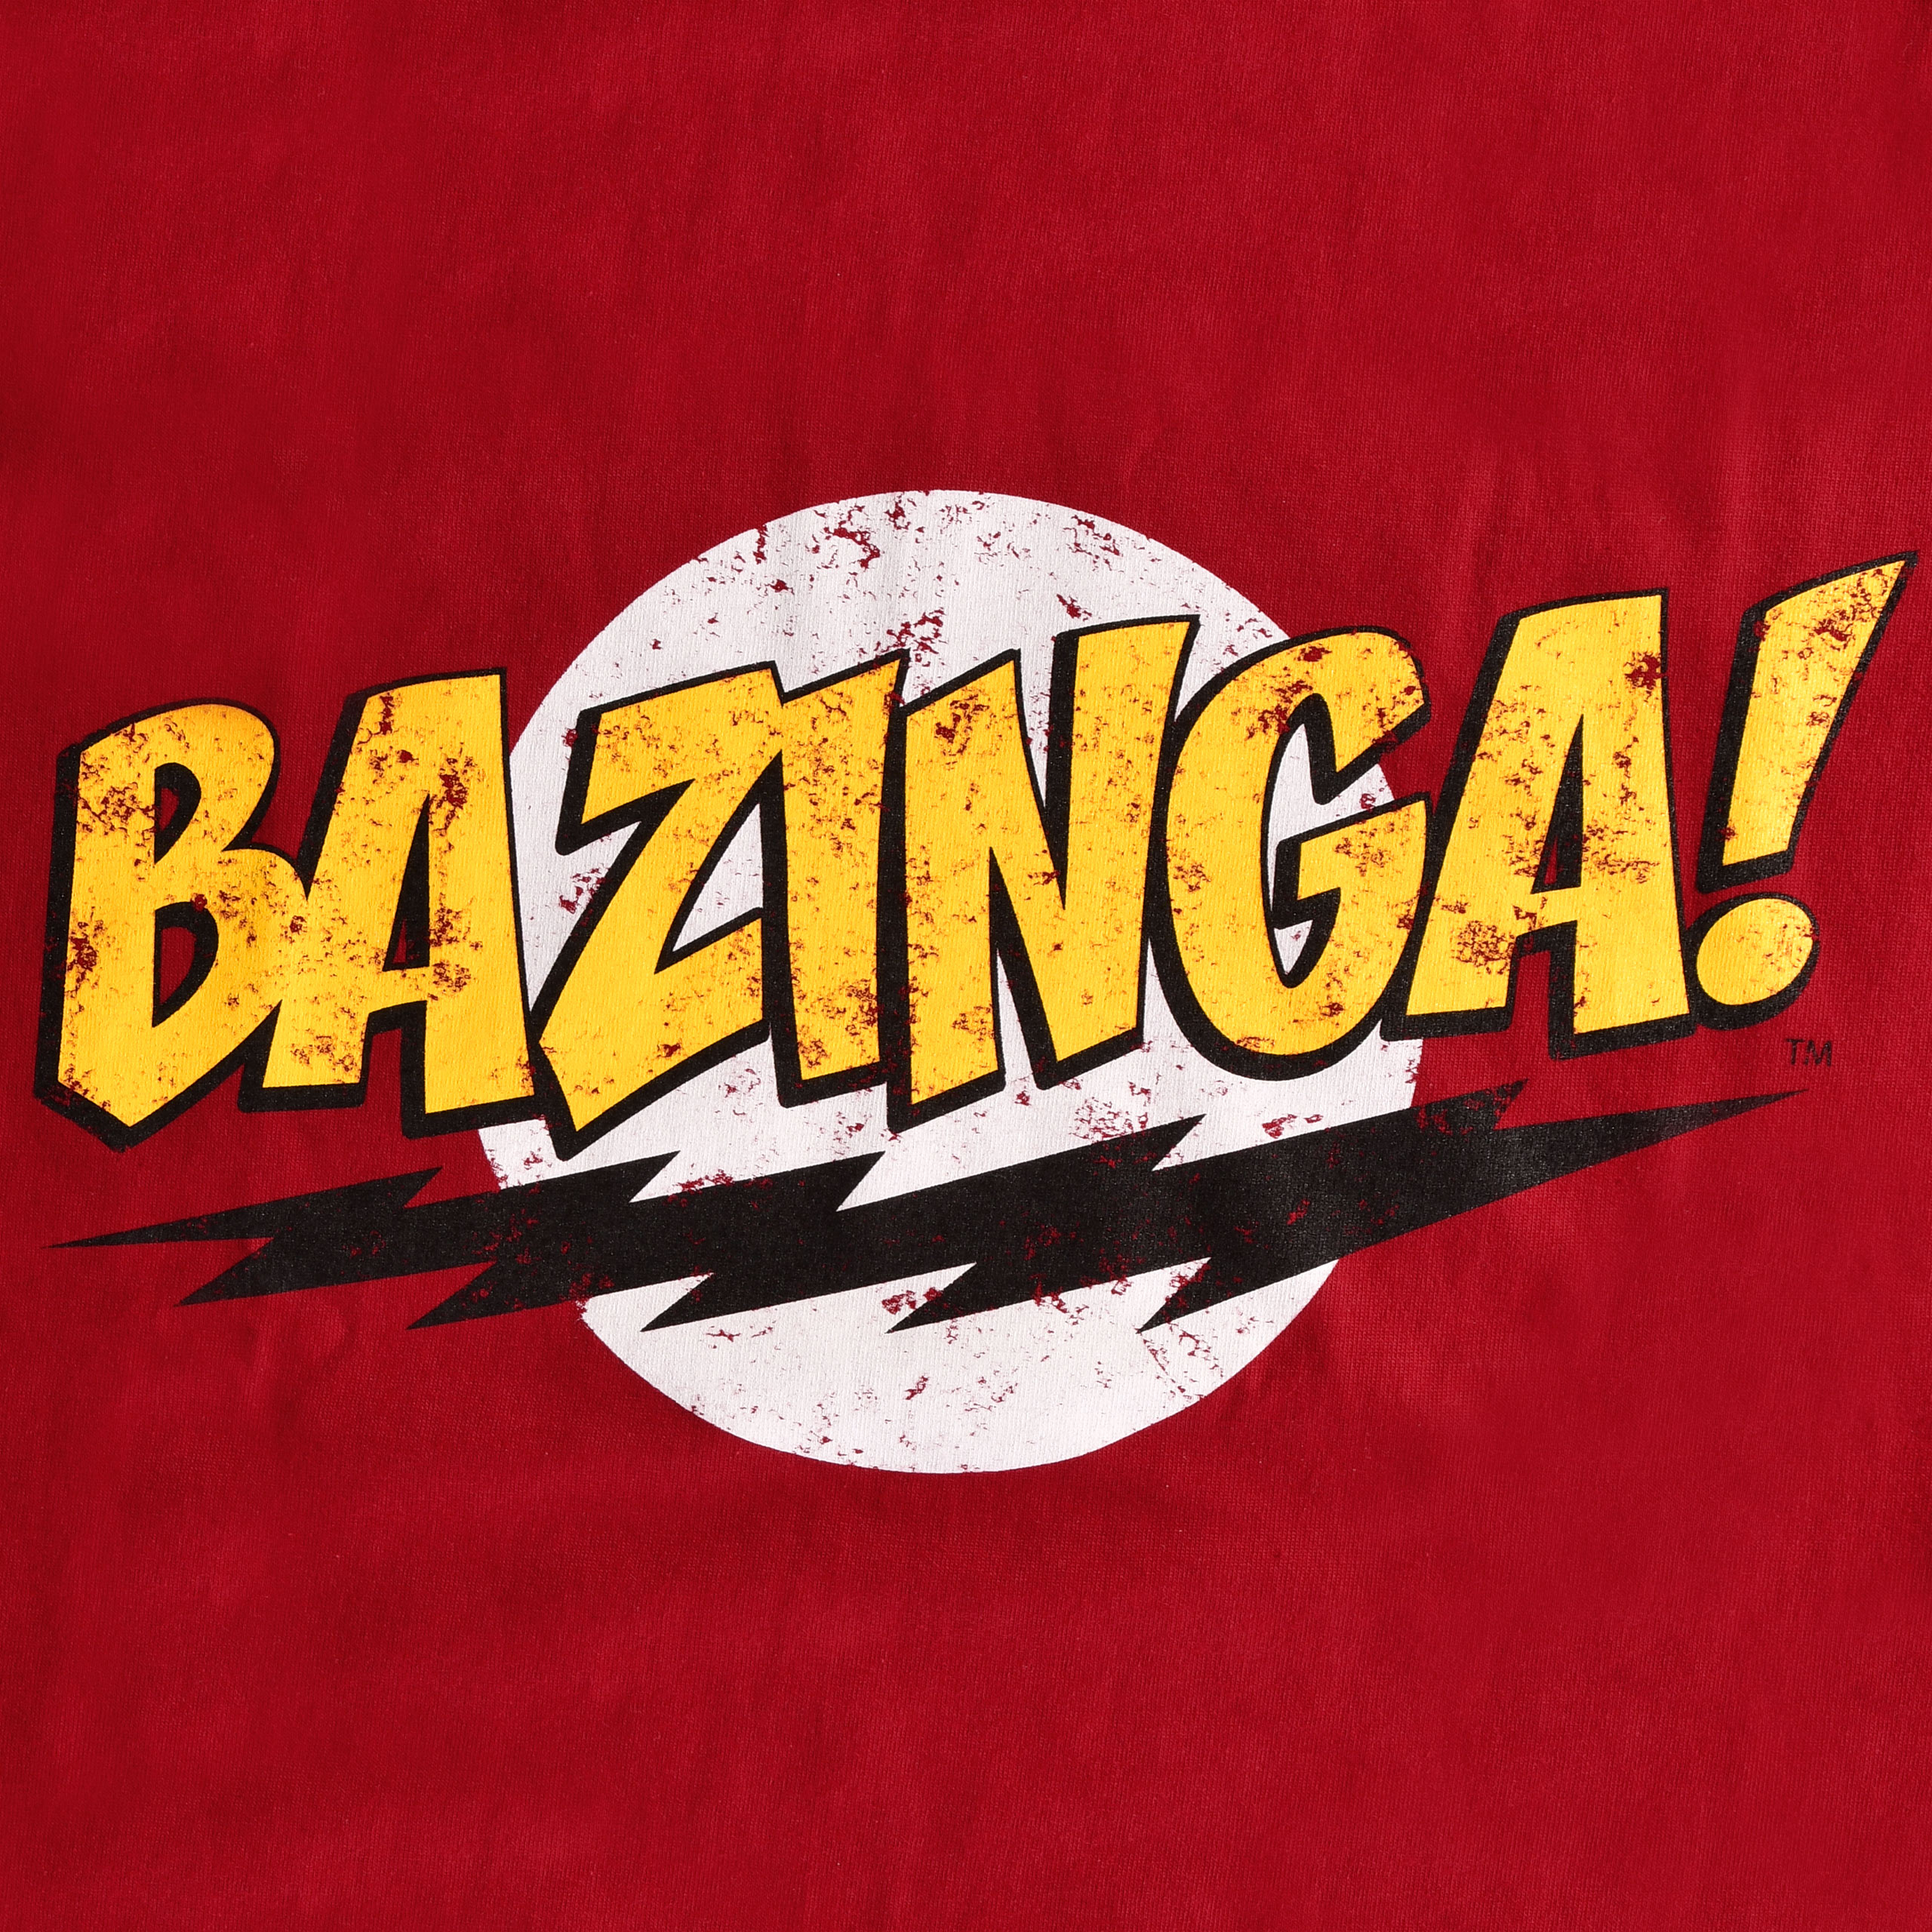 Big Bang Theory - Bazinga Full Size T-Shirt rot | The Big Bang Theory ...